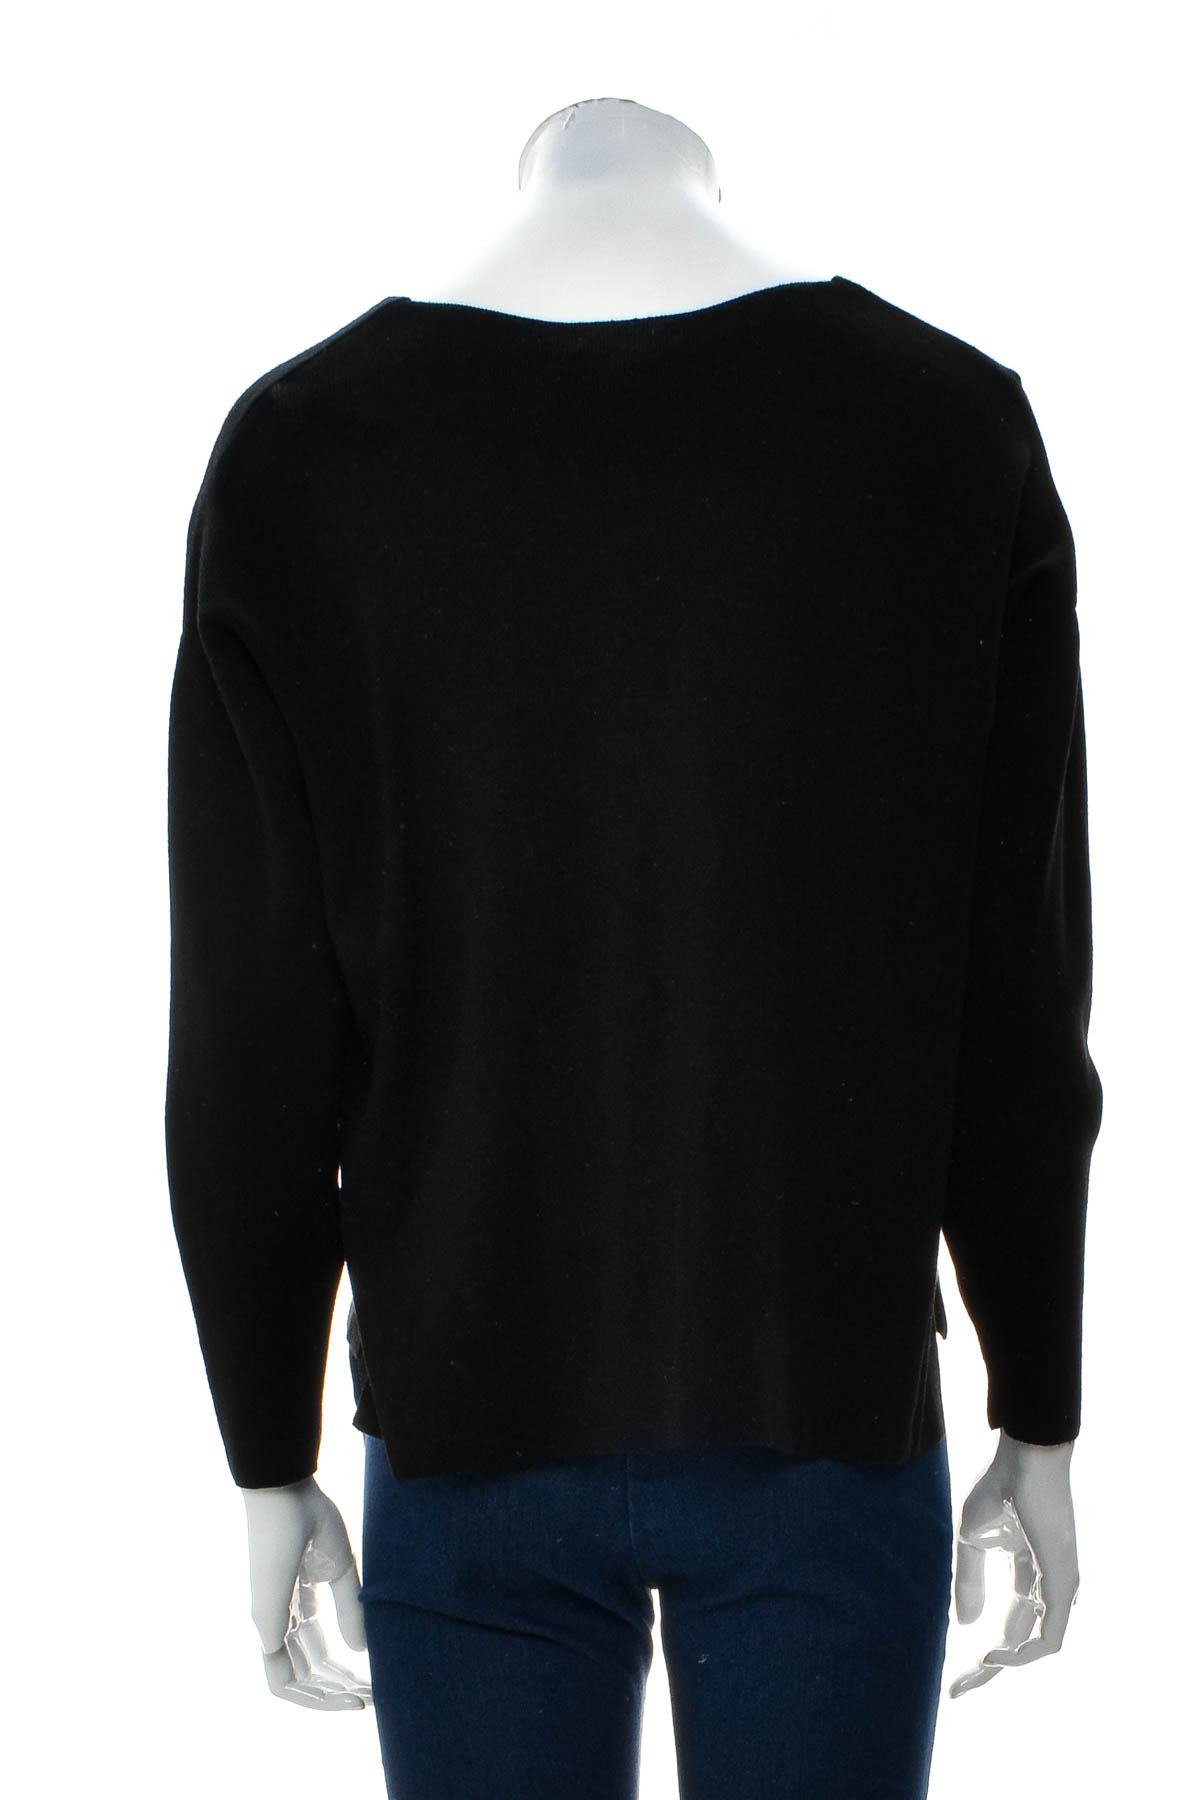 Women's sweater - H&M Basic - 1